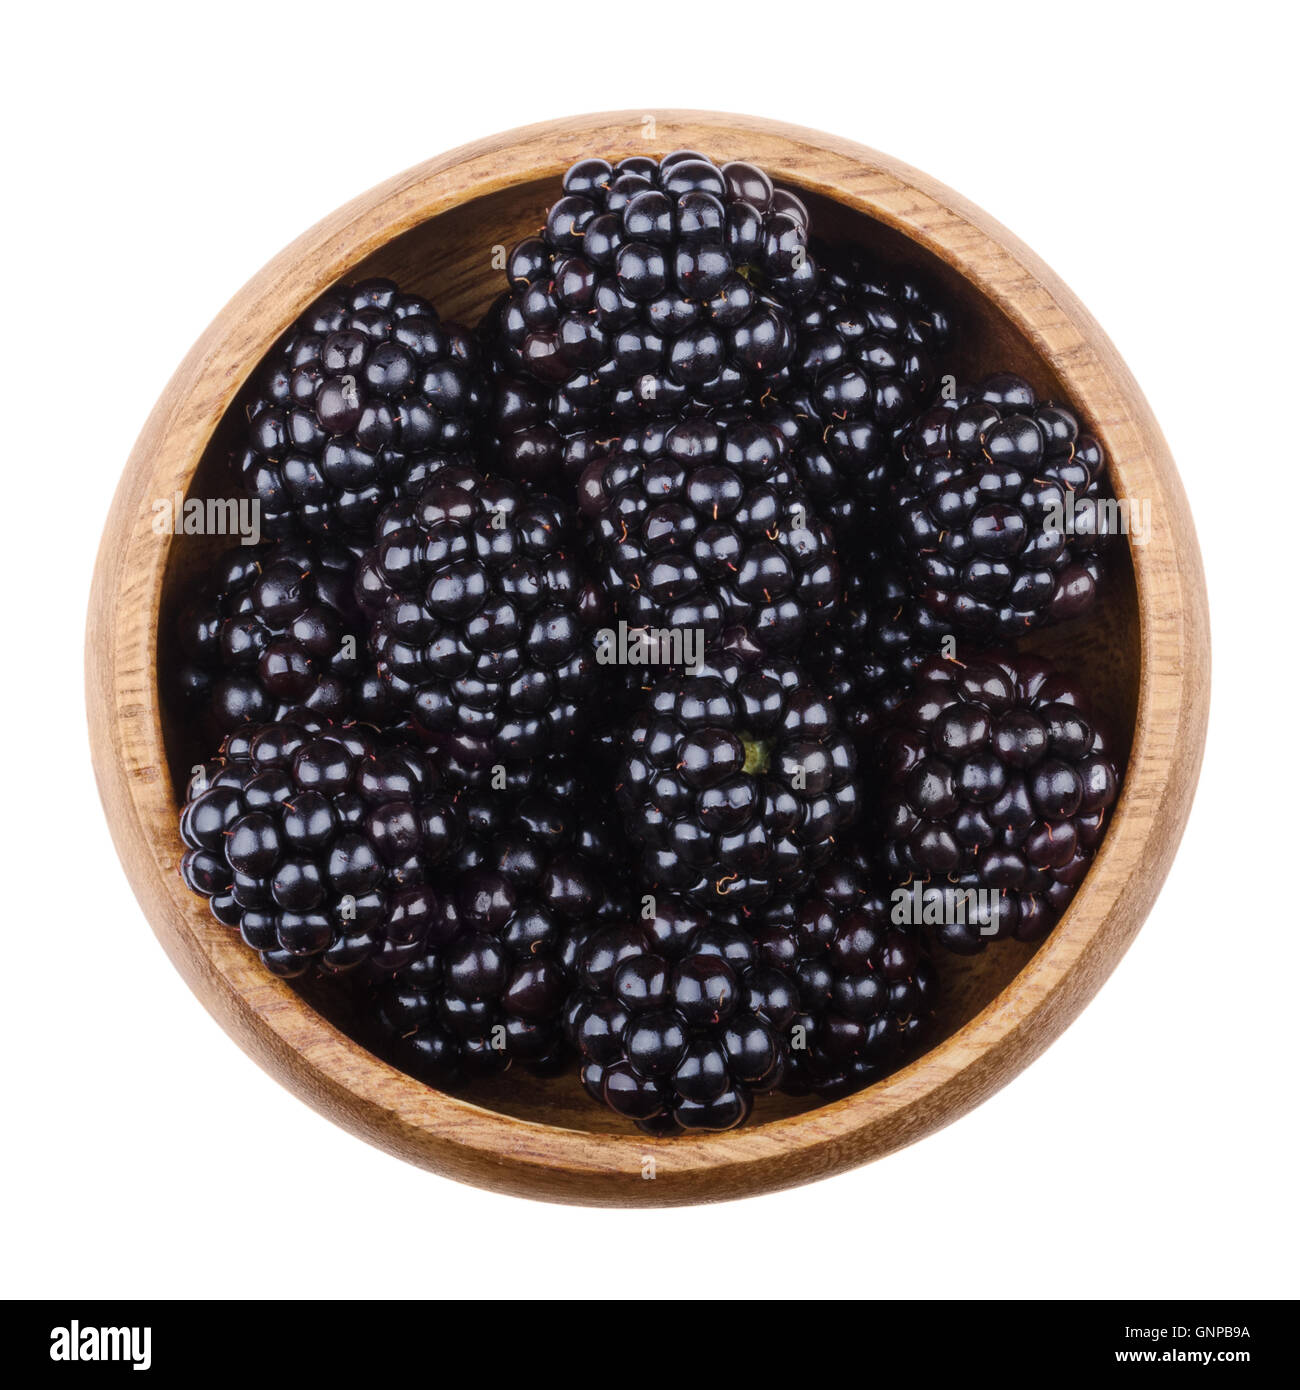 Blackberries in a wooden bowl on white background. Black edible ripe fruit of Rubus fruticosus. Stock Photo